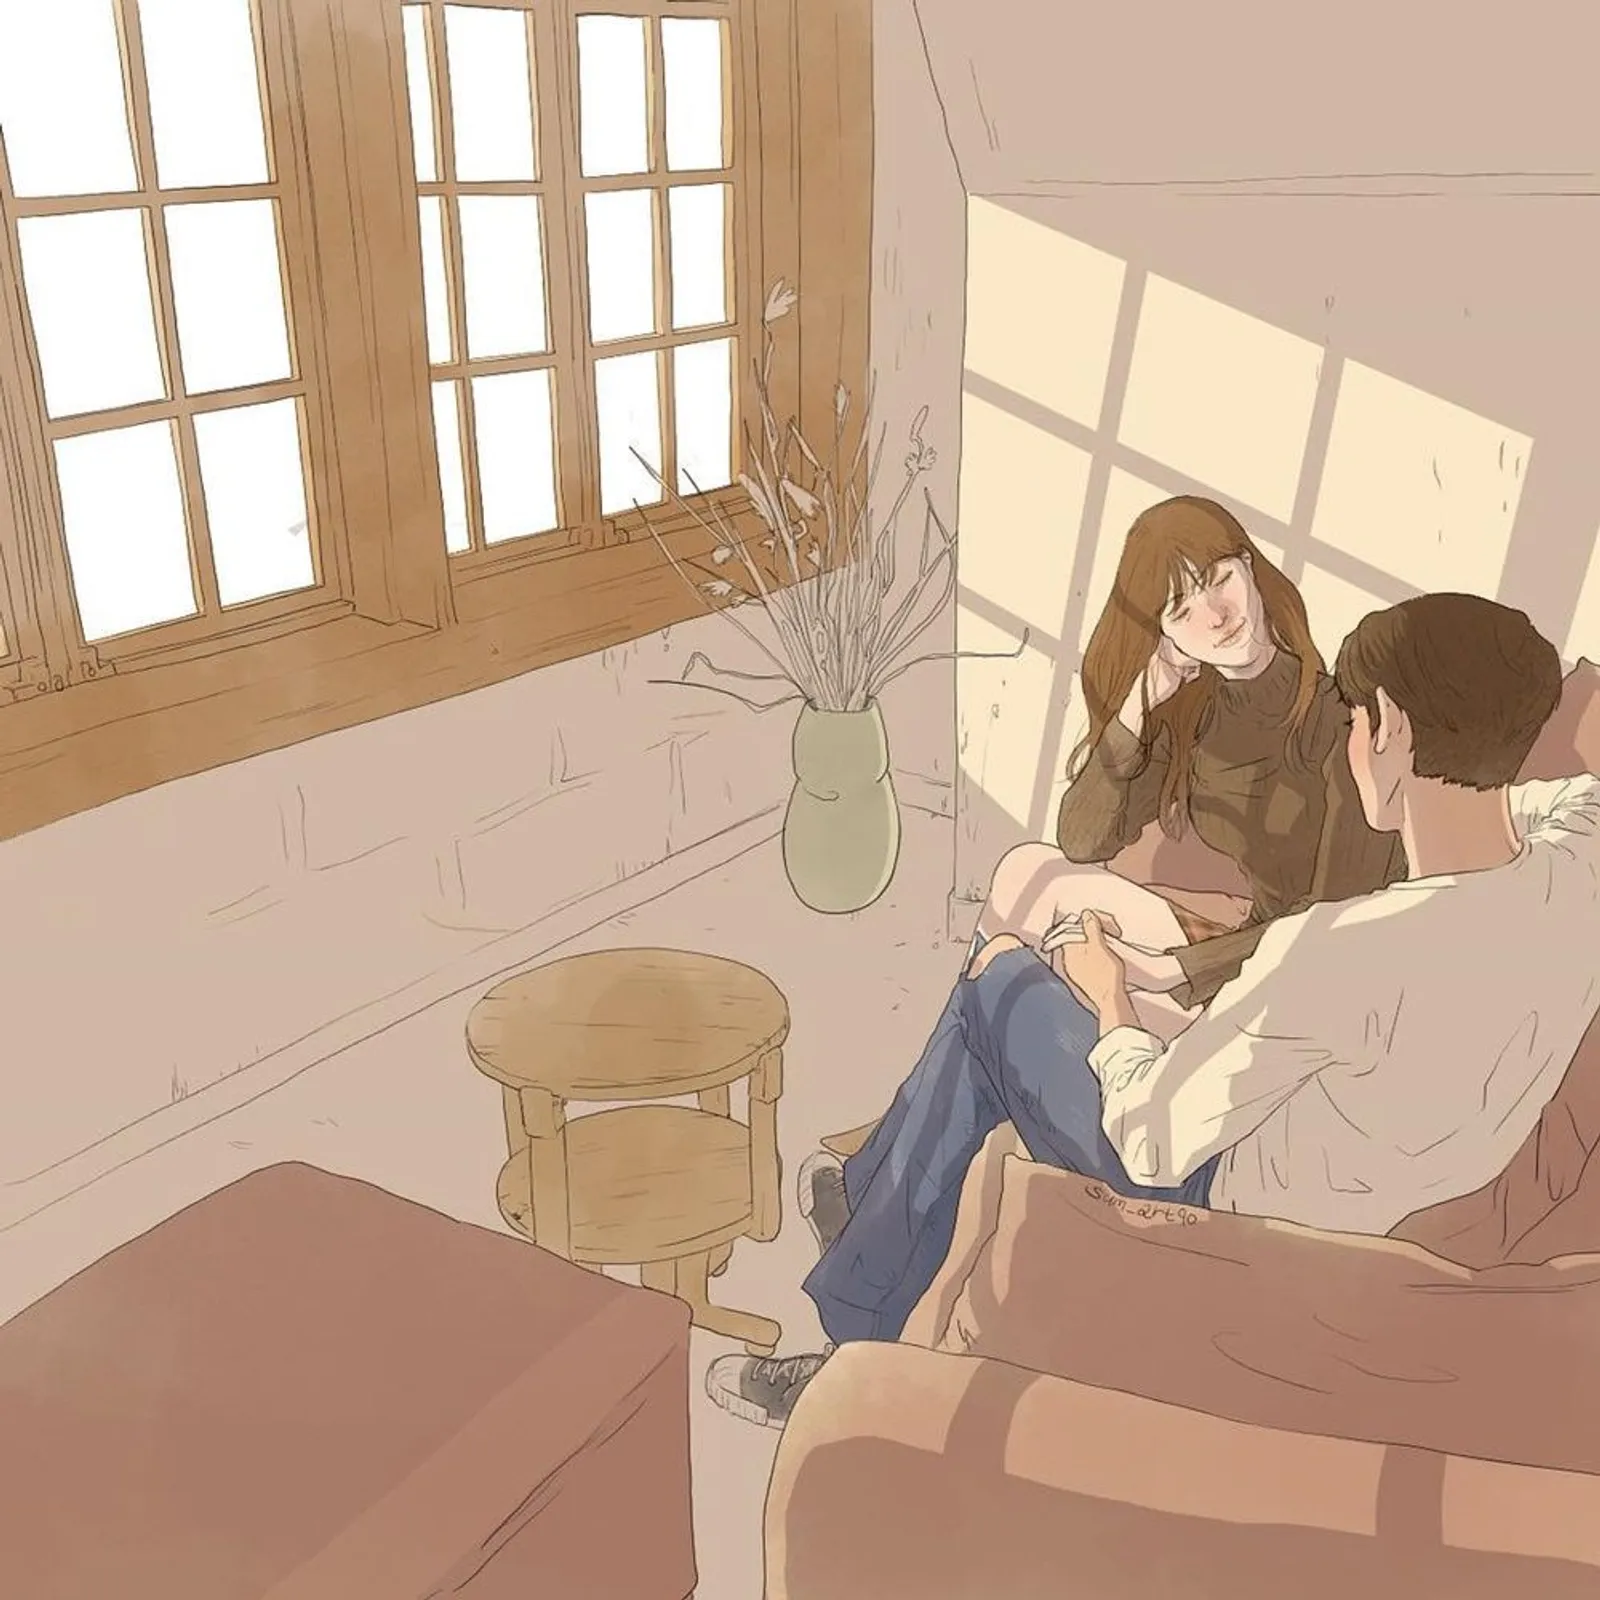 9 Ilustrasi Romantis tentang Lika-liku Percintaan, Mirip Drama Korea!